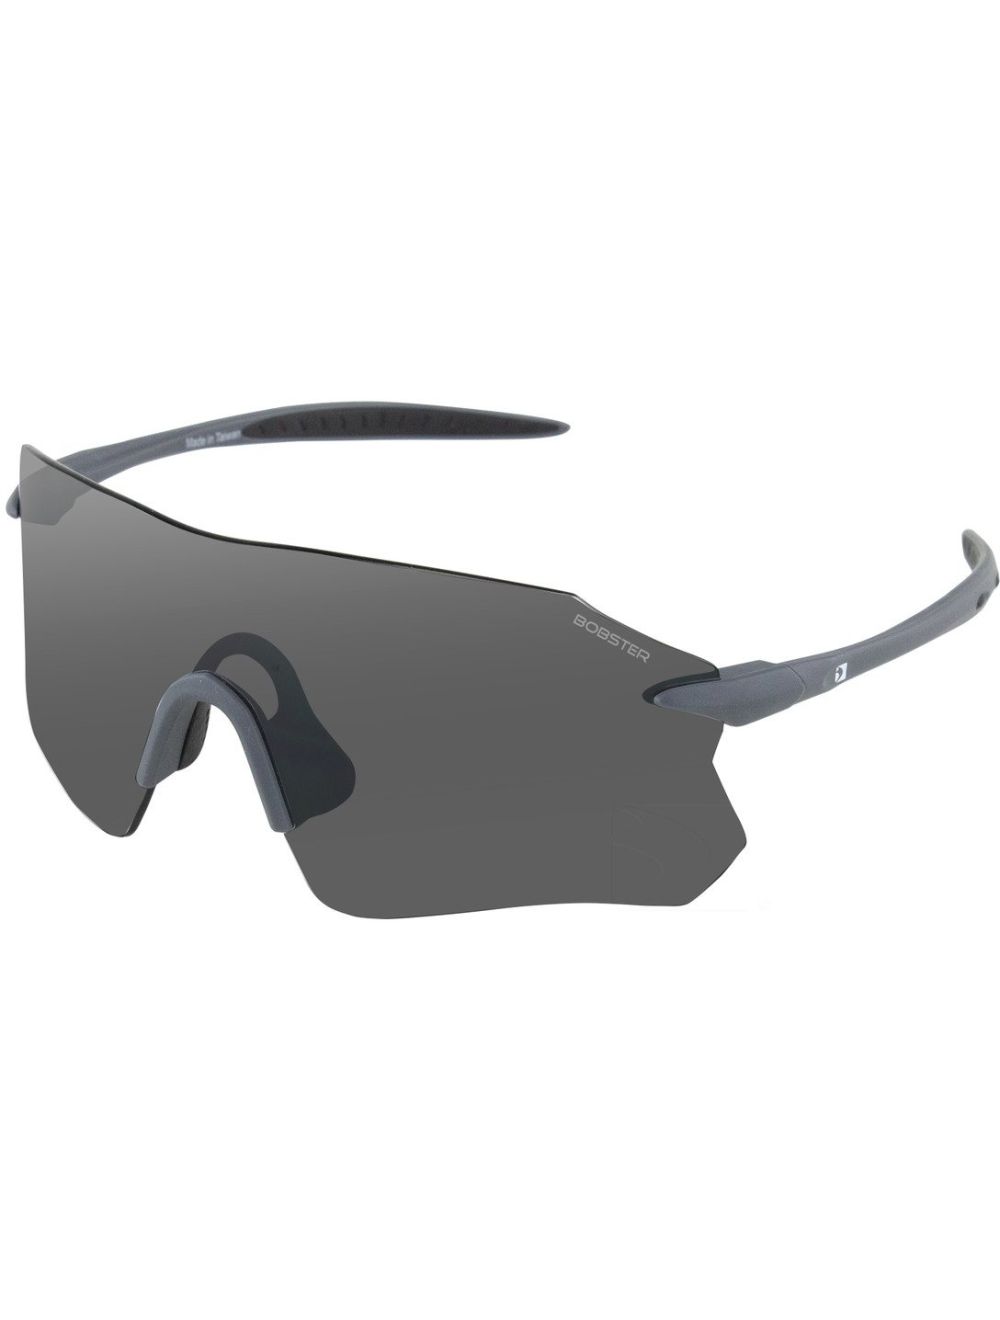 Aero Sunglasses - Matte Gray Frame w/ Smoke Silver Mirror Lens